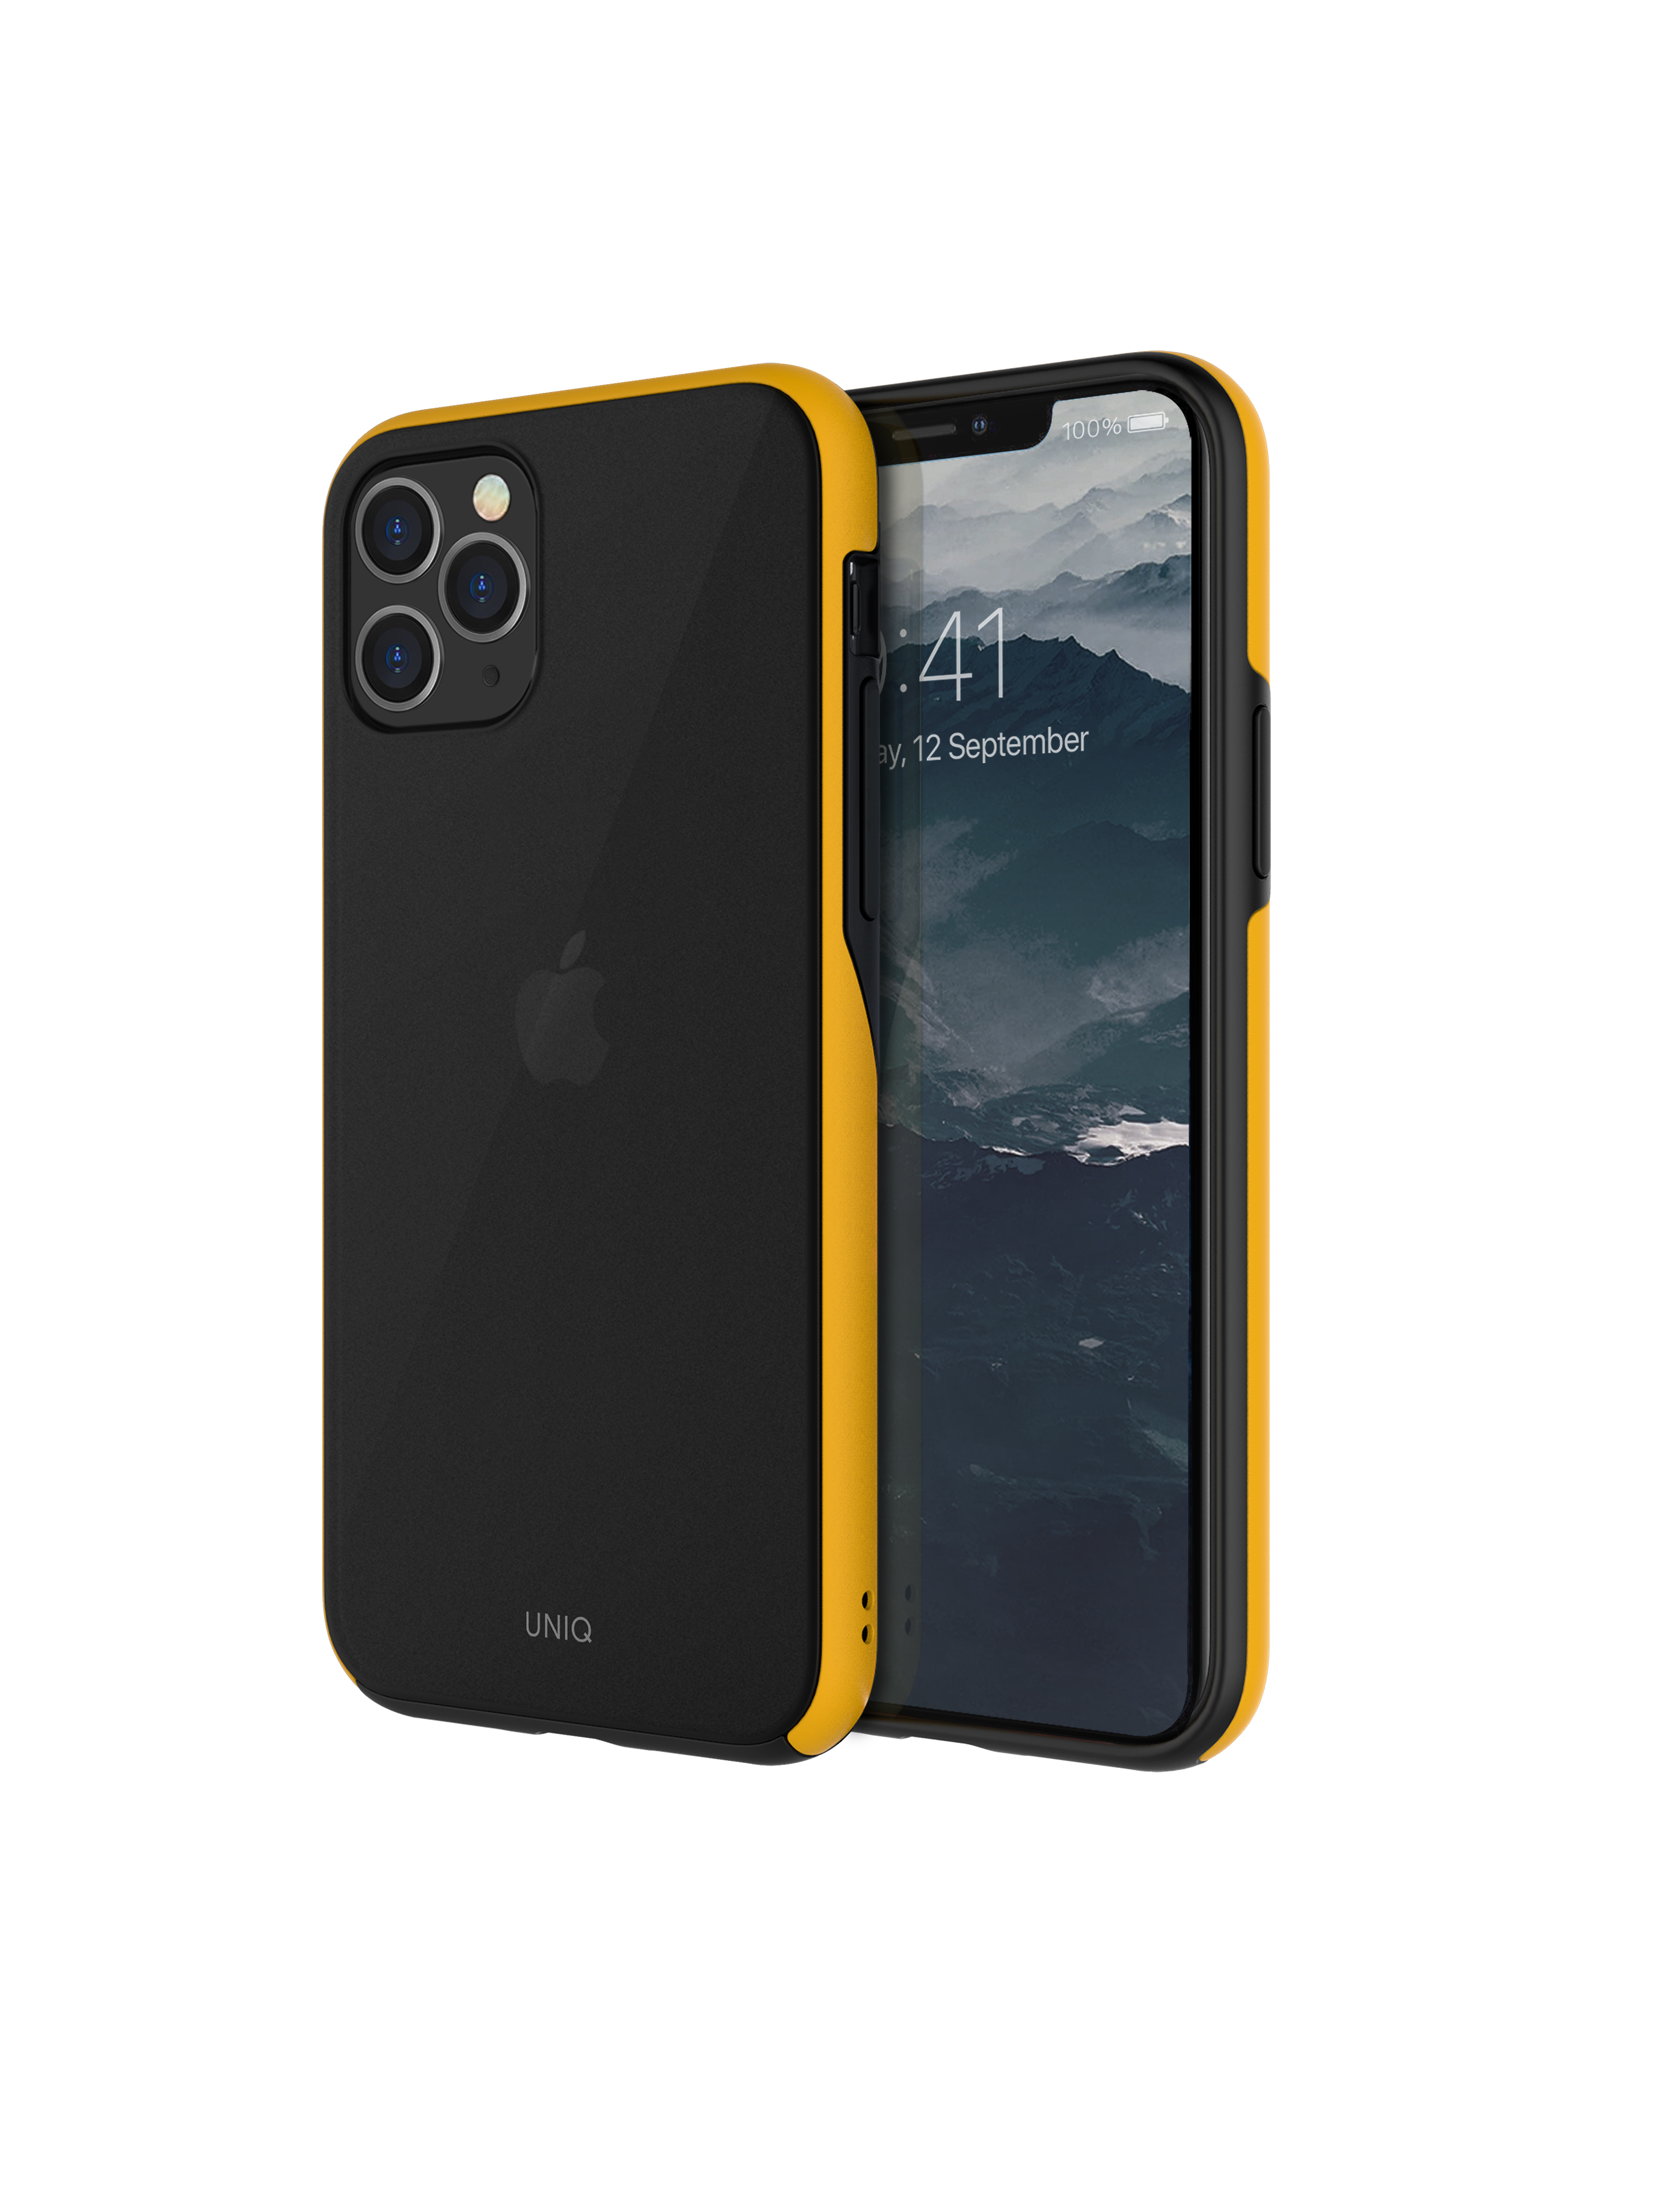 iPhone 11 Pro Max, case vesto hue, black/yellow